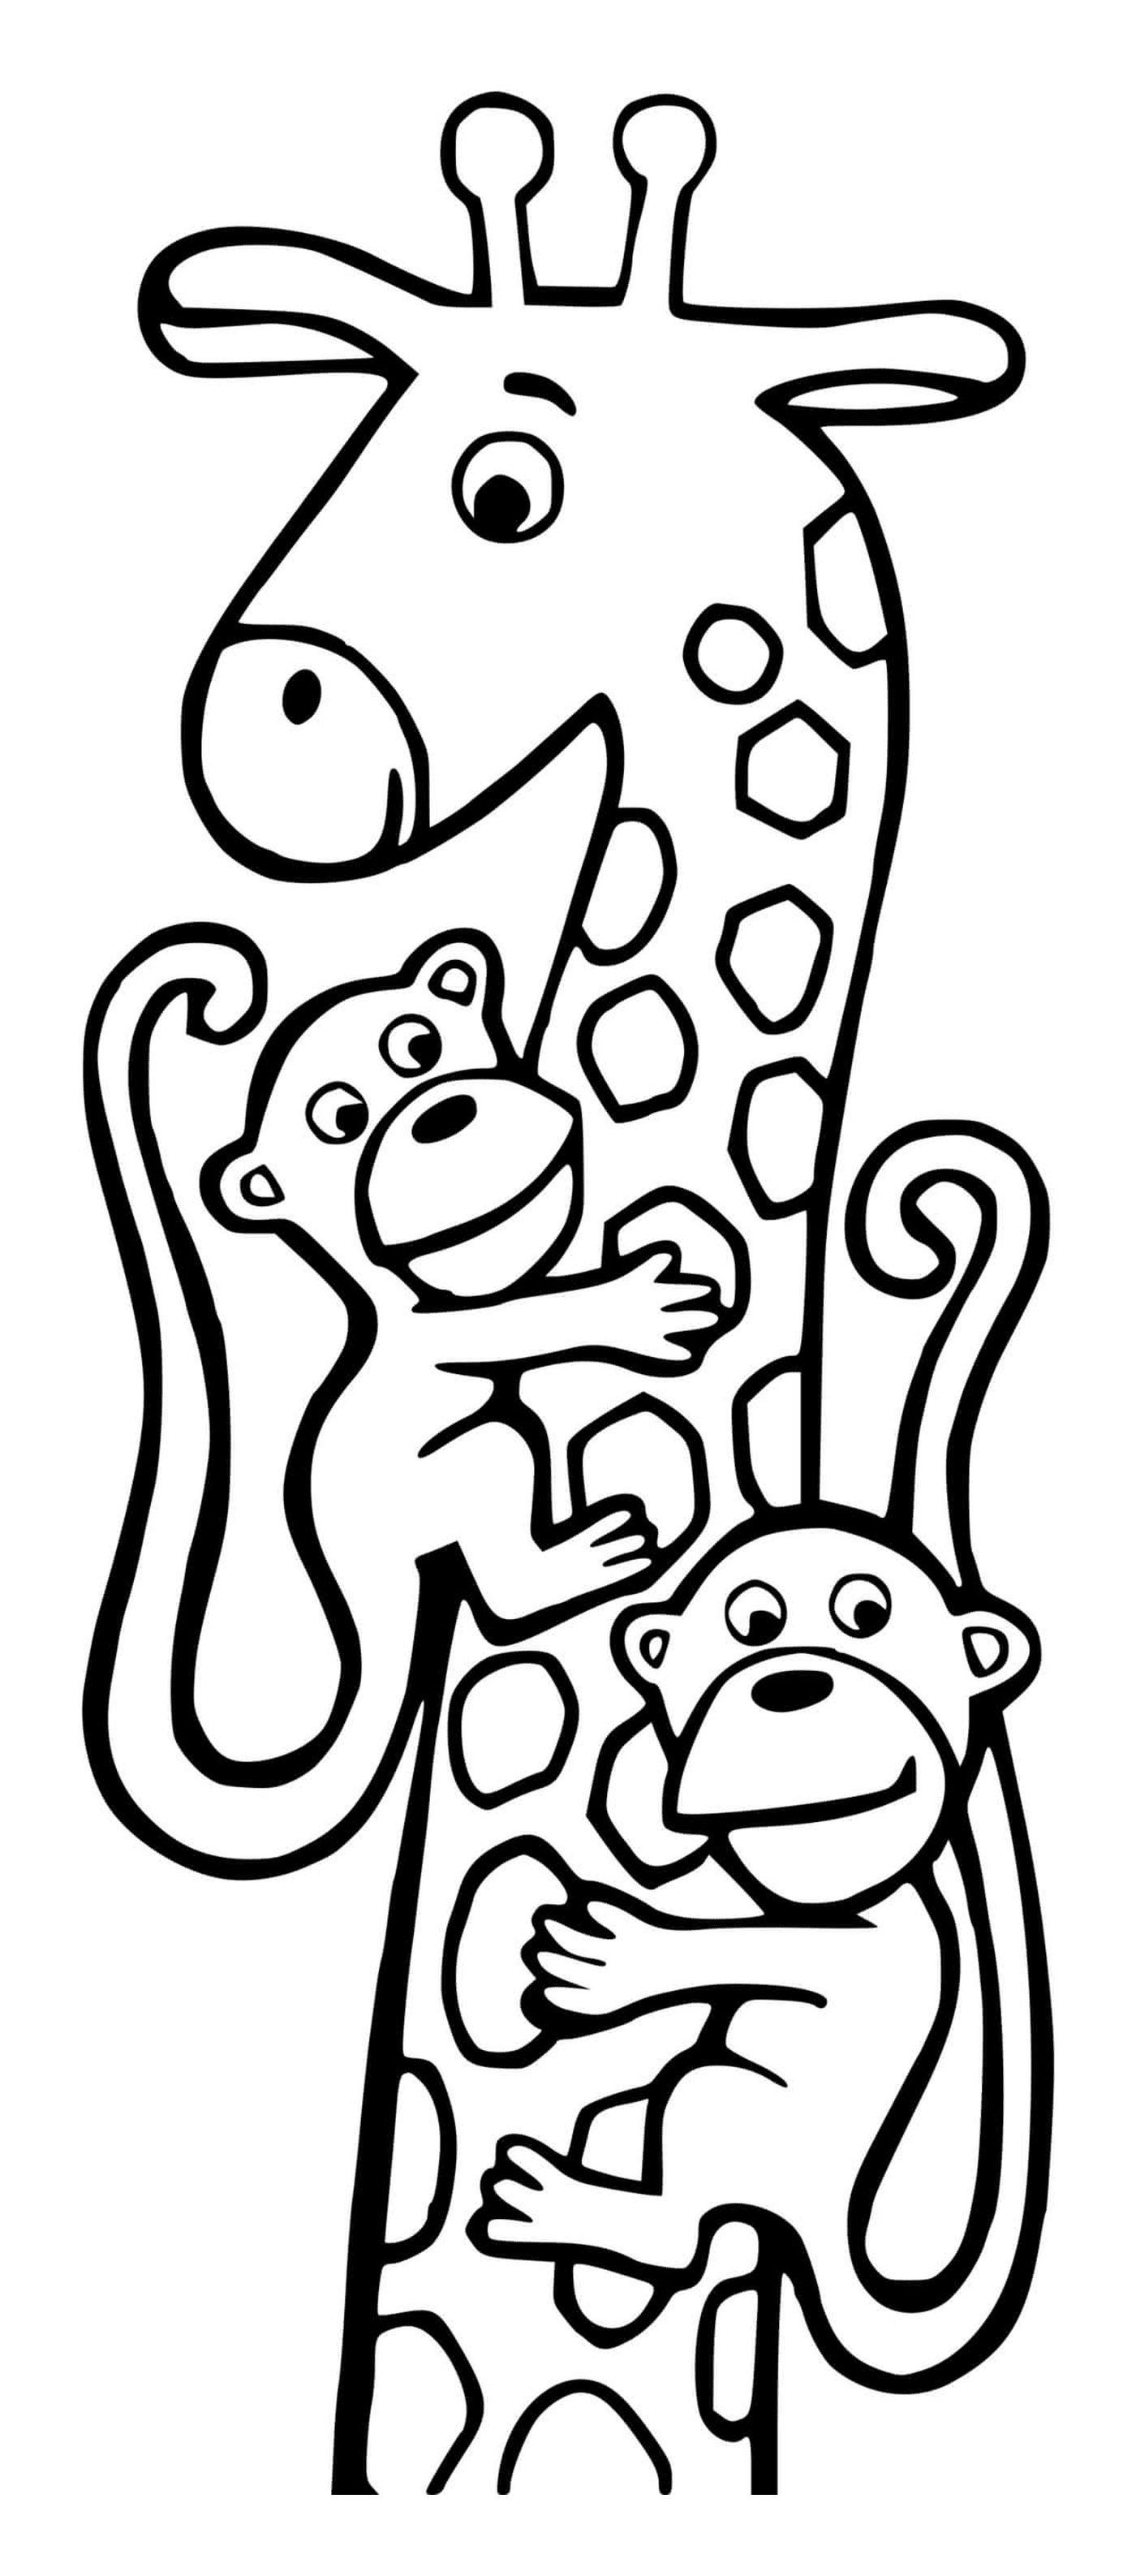  Girafe and two monkeys 